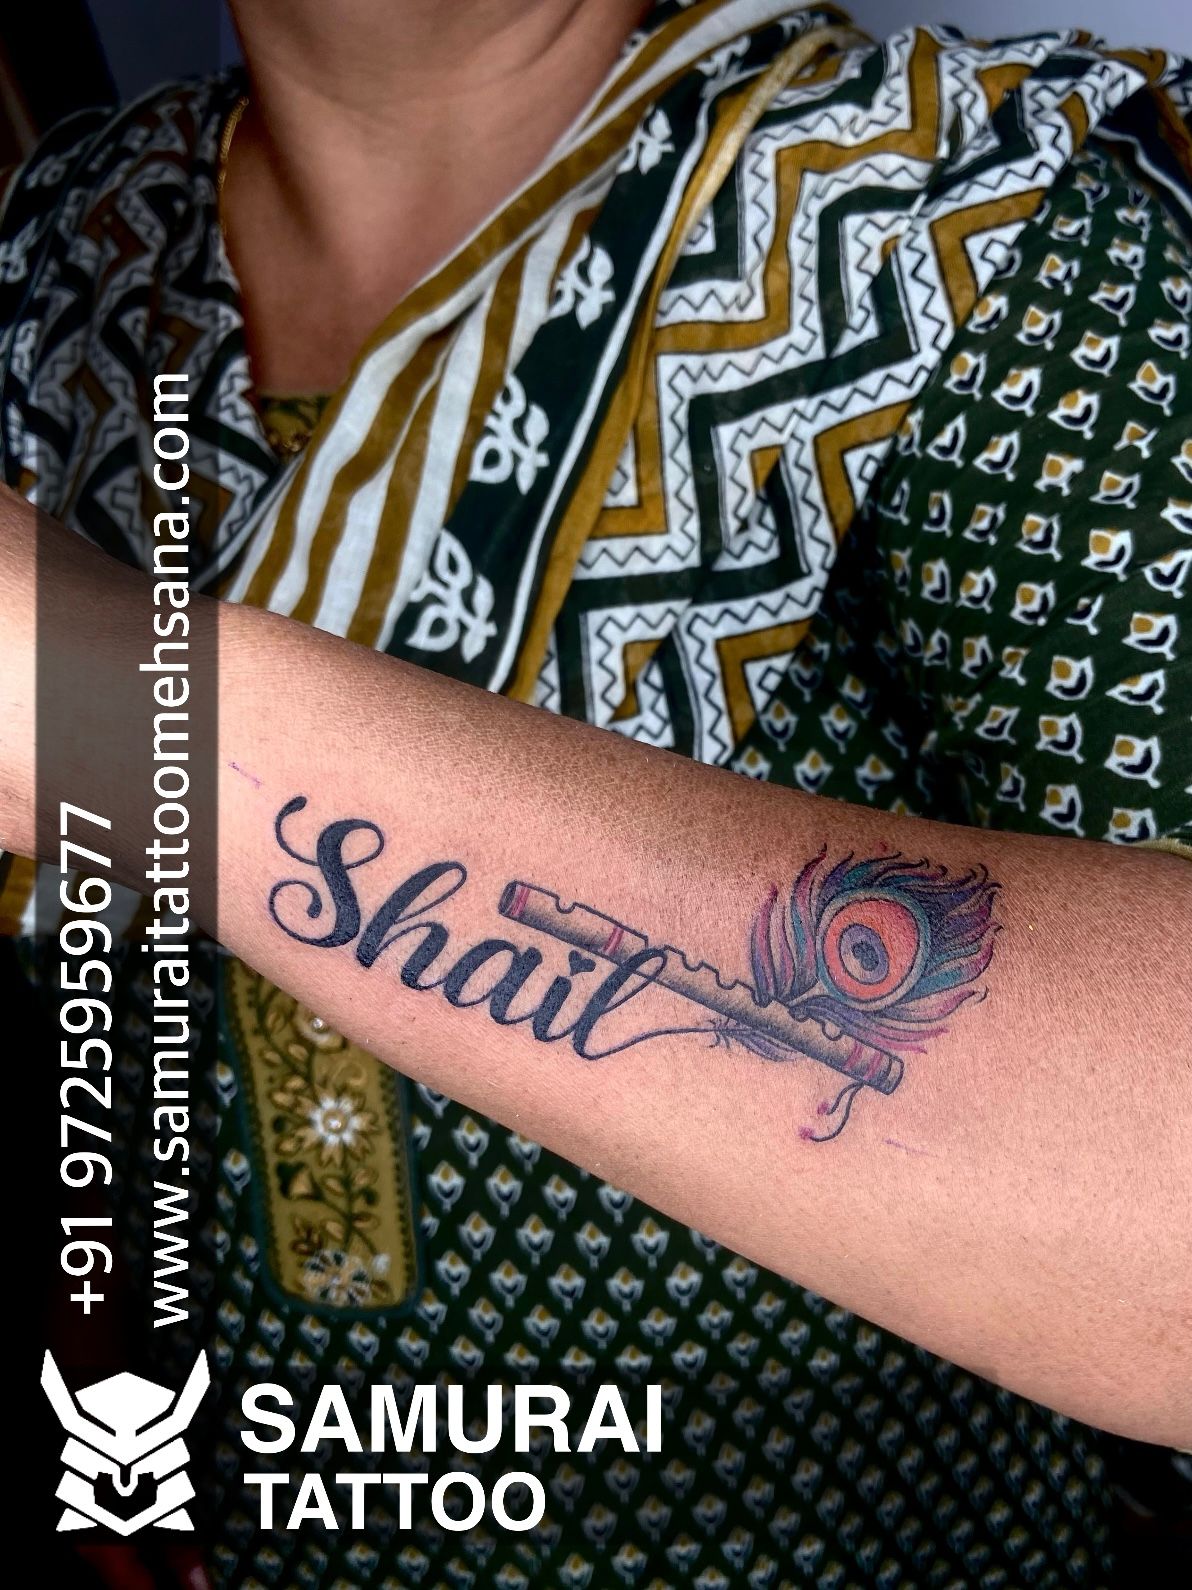 CRAZY INK TATTOO & BODY PIERCING in Raipur, India